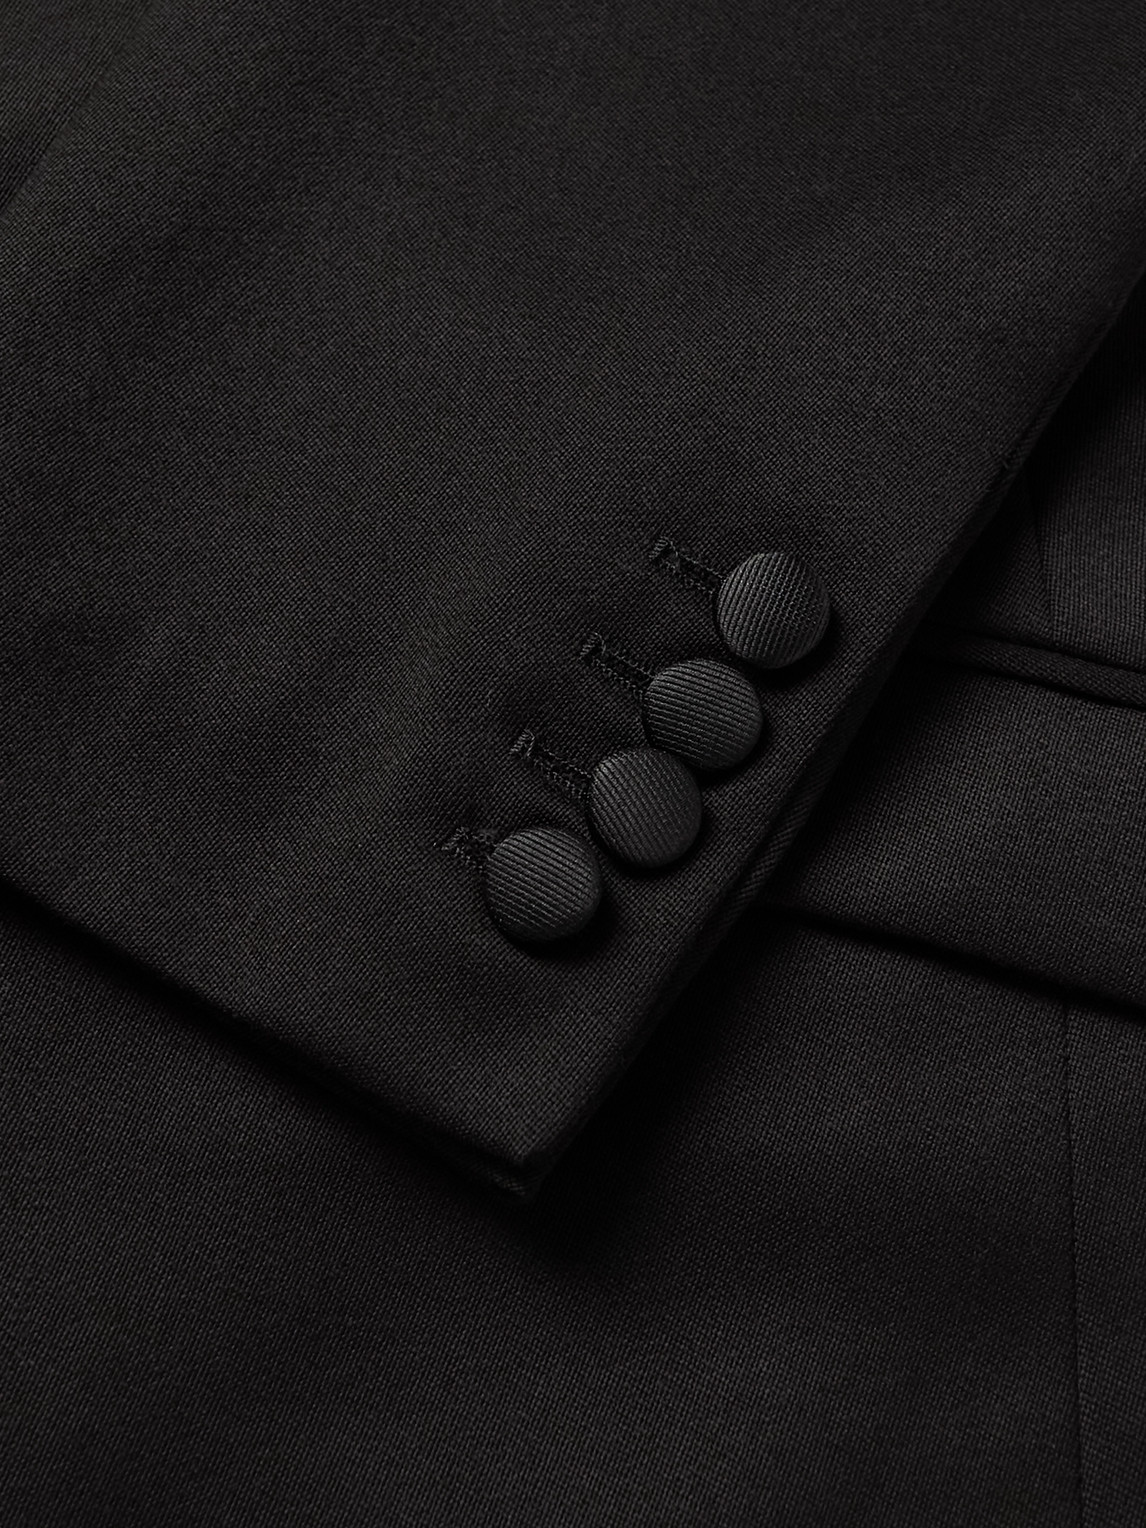 Shop Favourbrook Hampton Wool Tuxedo Jacket In Black